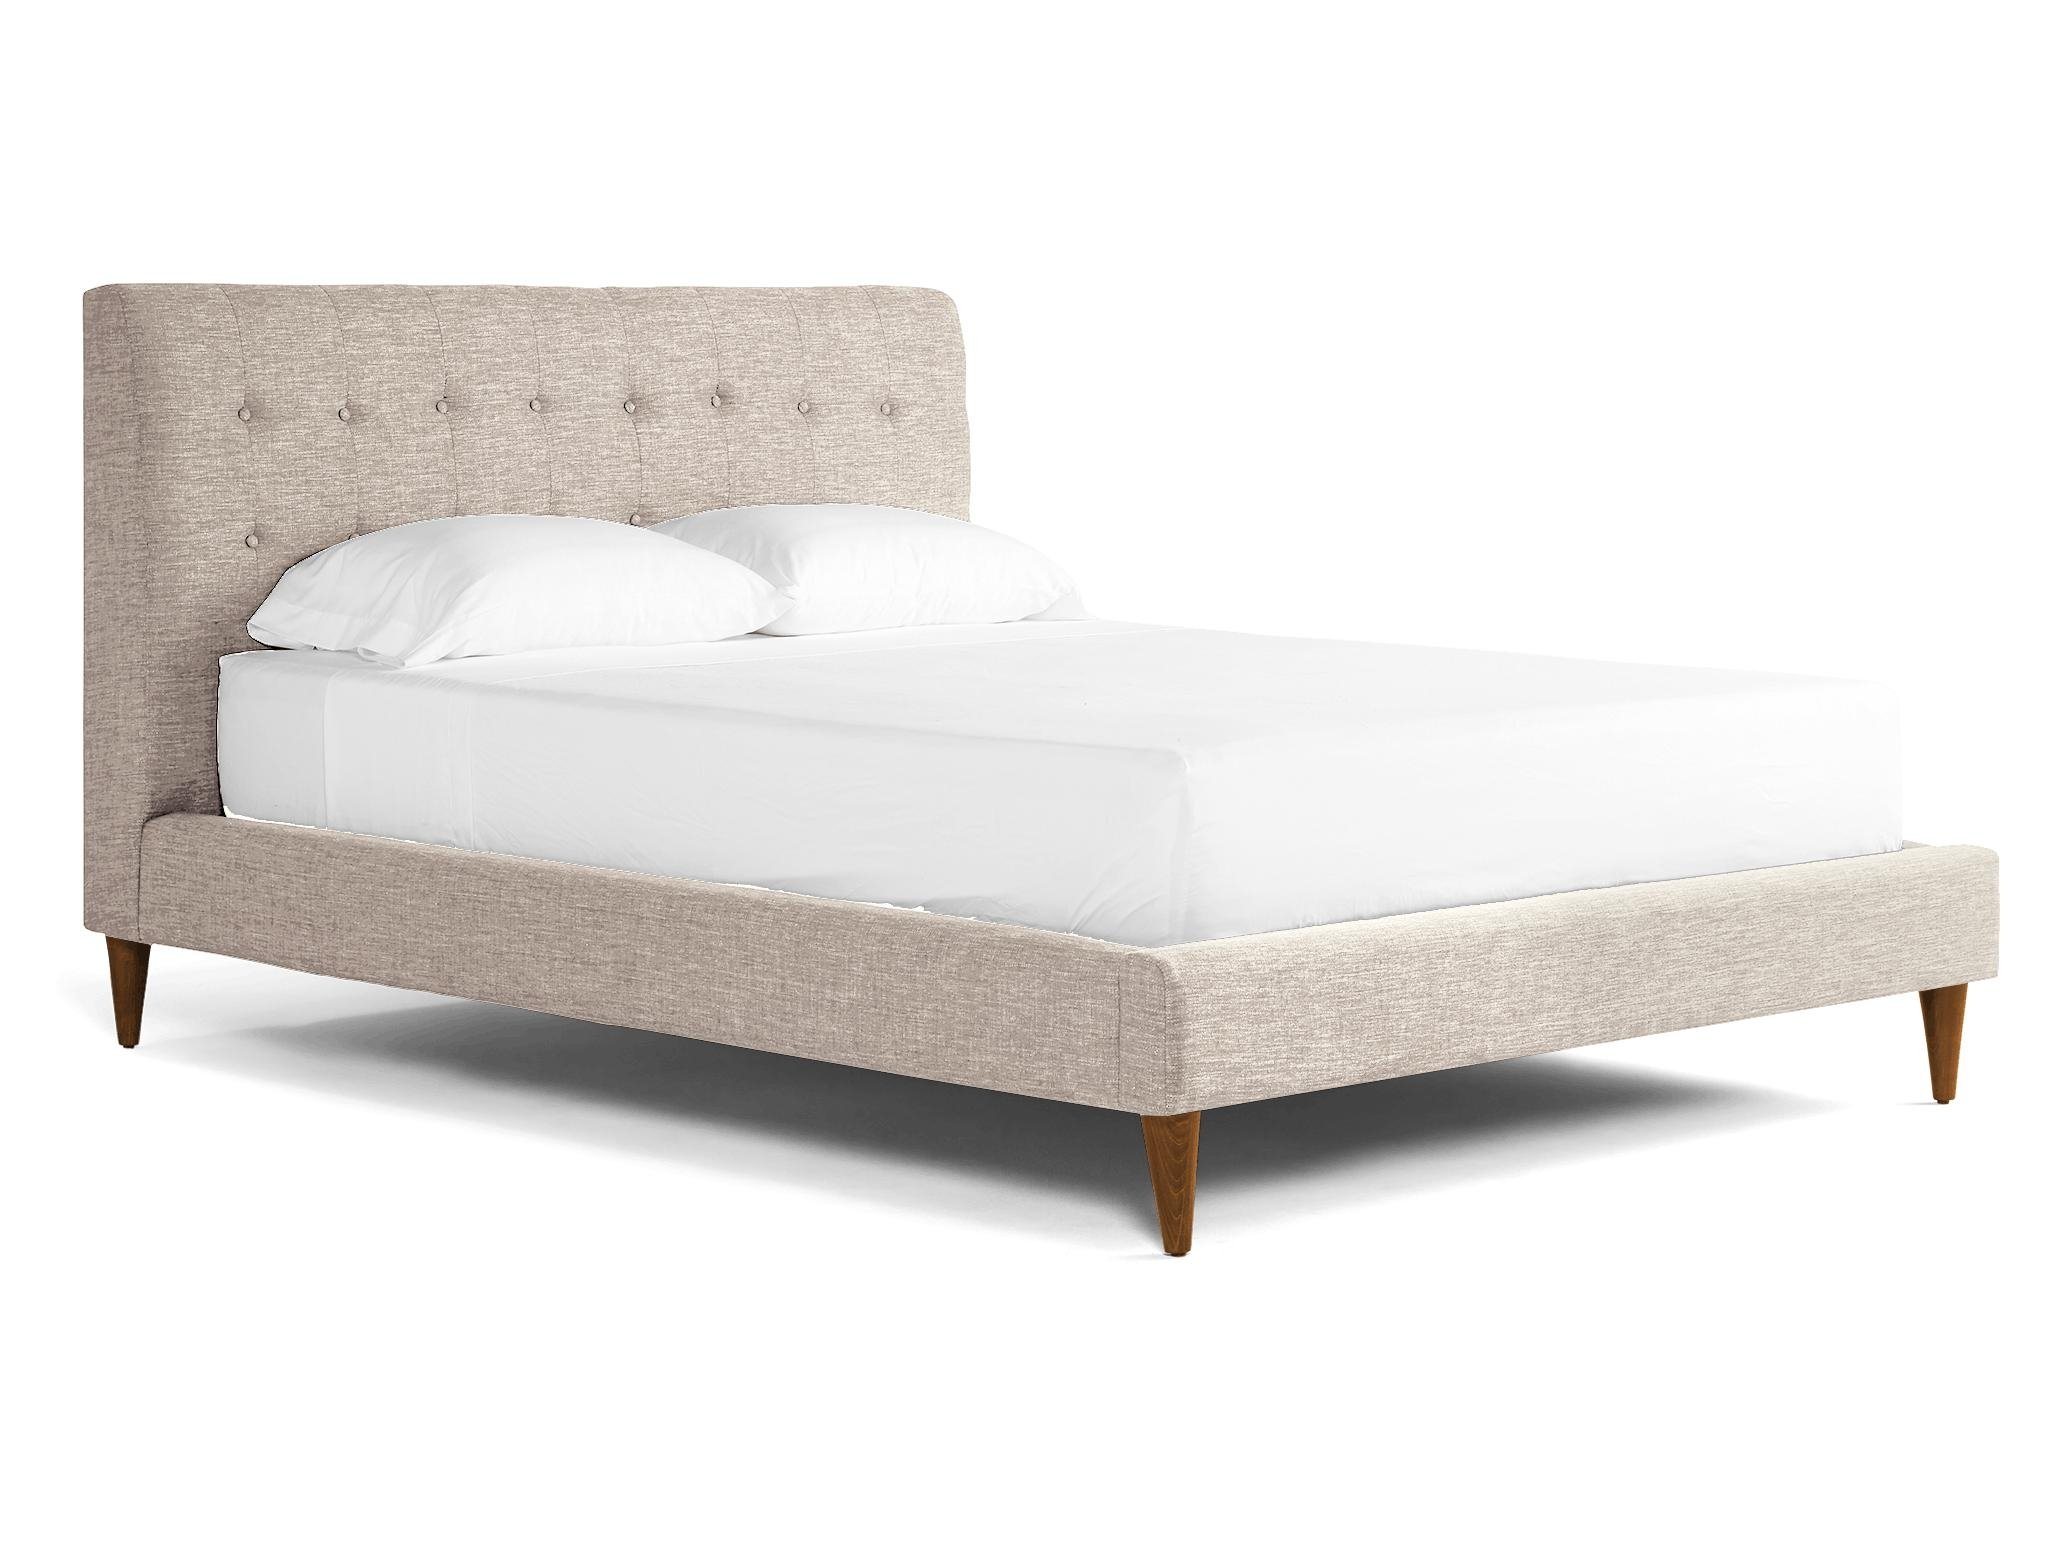 White Eliot Mid Century Modern Bed - Nico Oyster - Mocha - Eastern King - Image 1